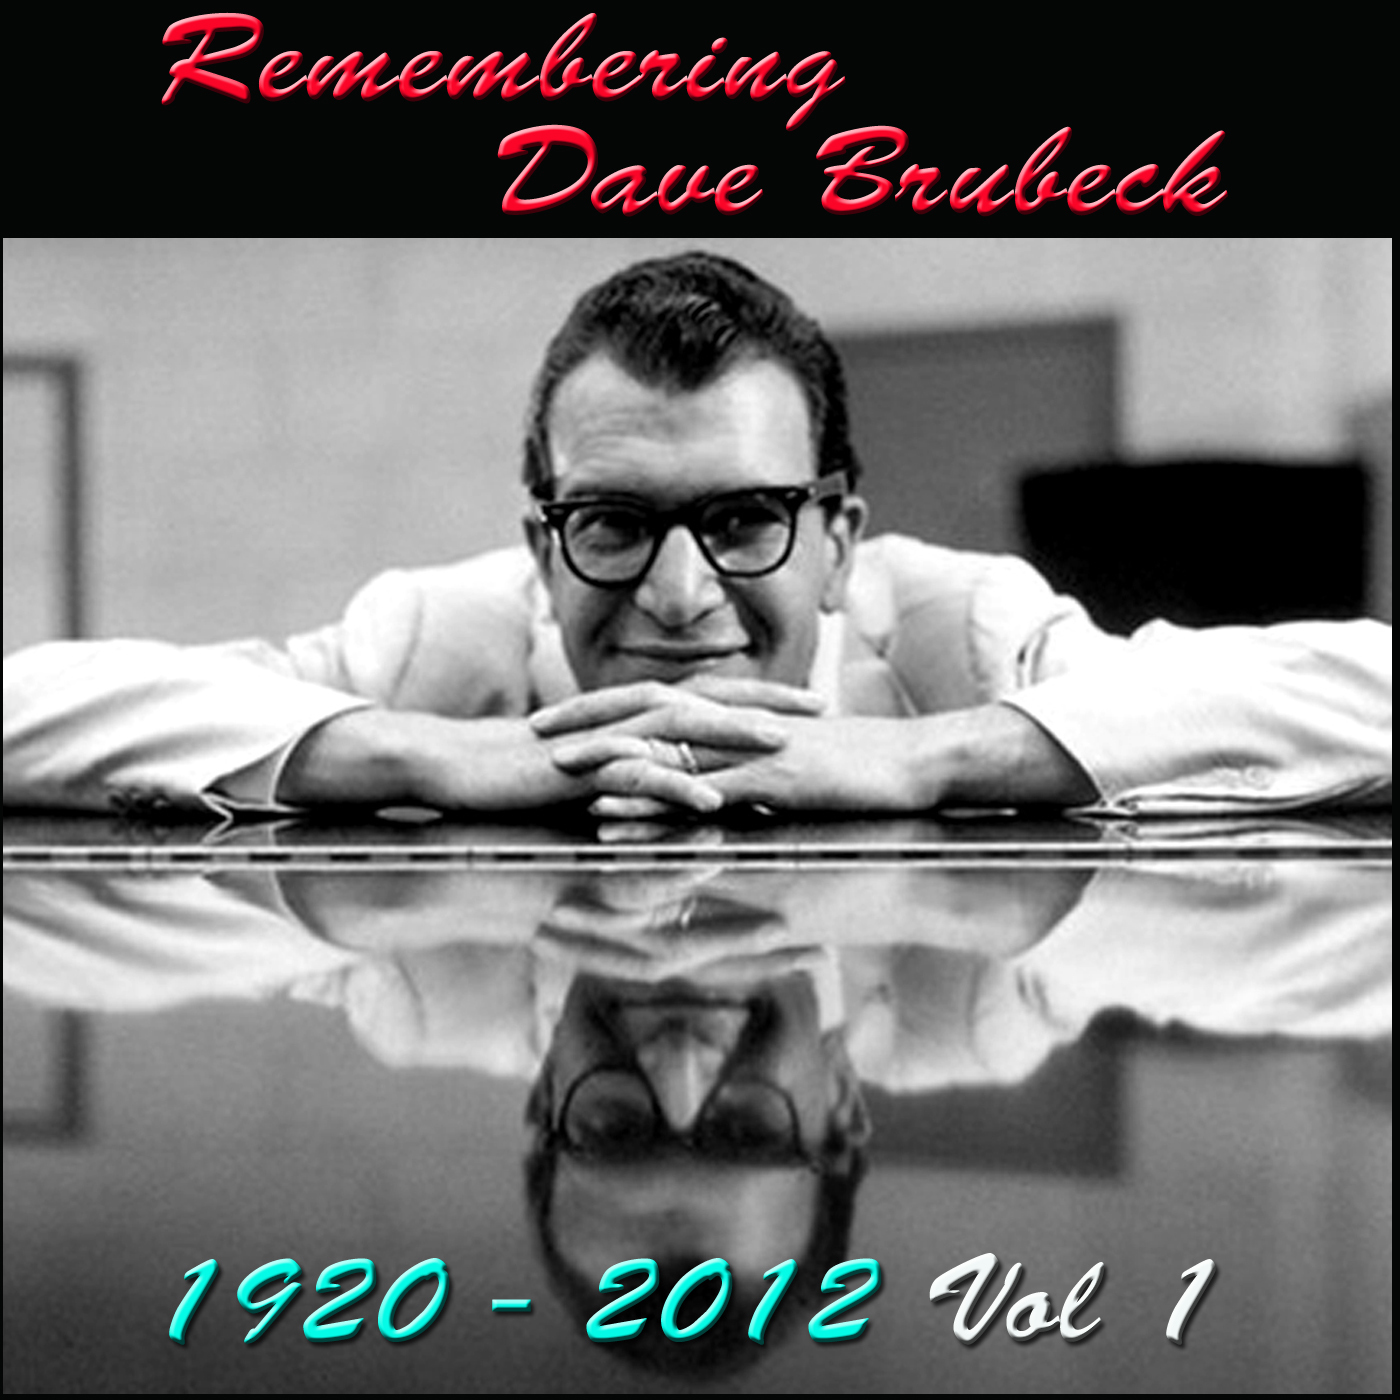 Remembering Dave Brubeck, 1920-2012, Vol. 1